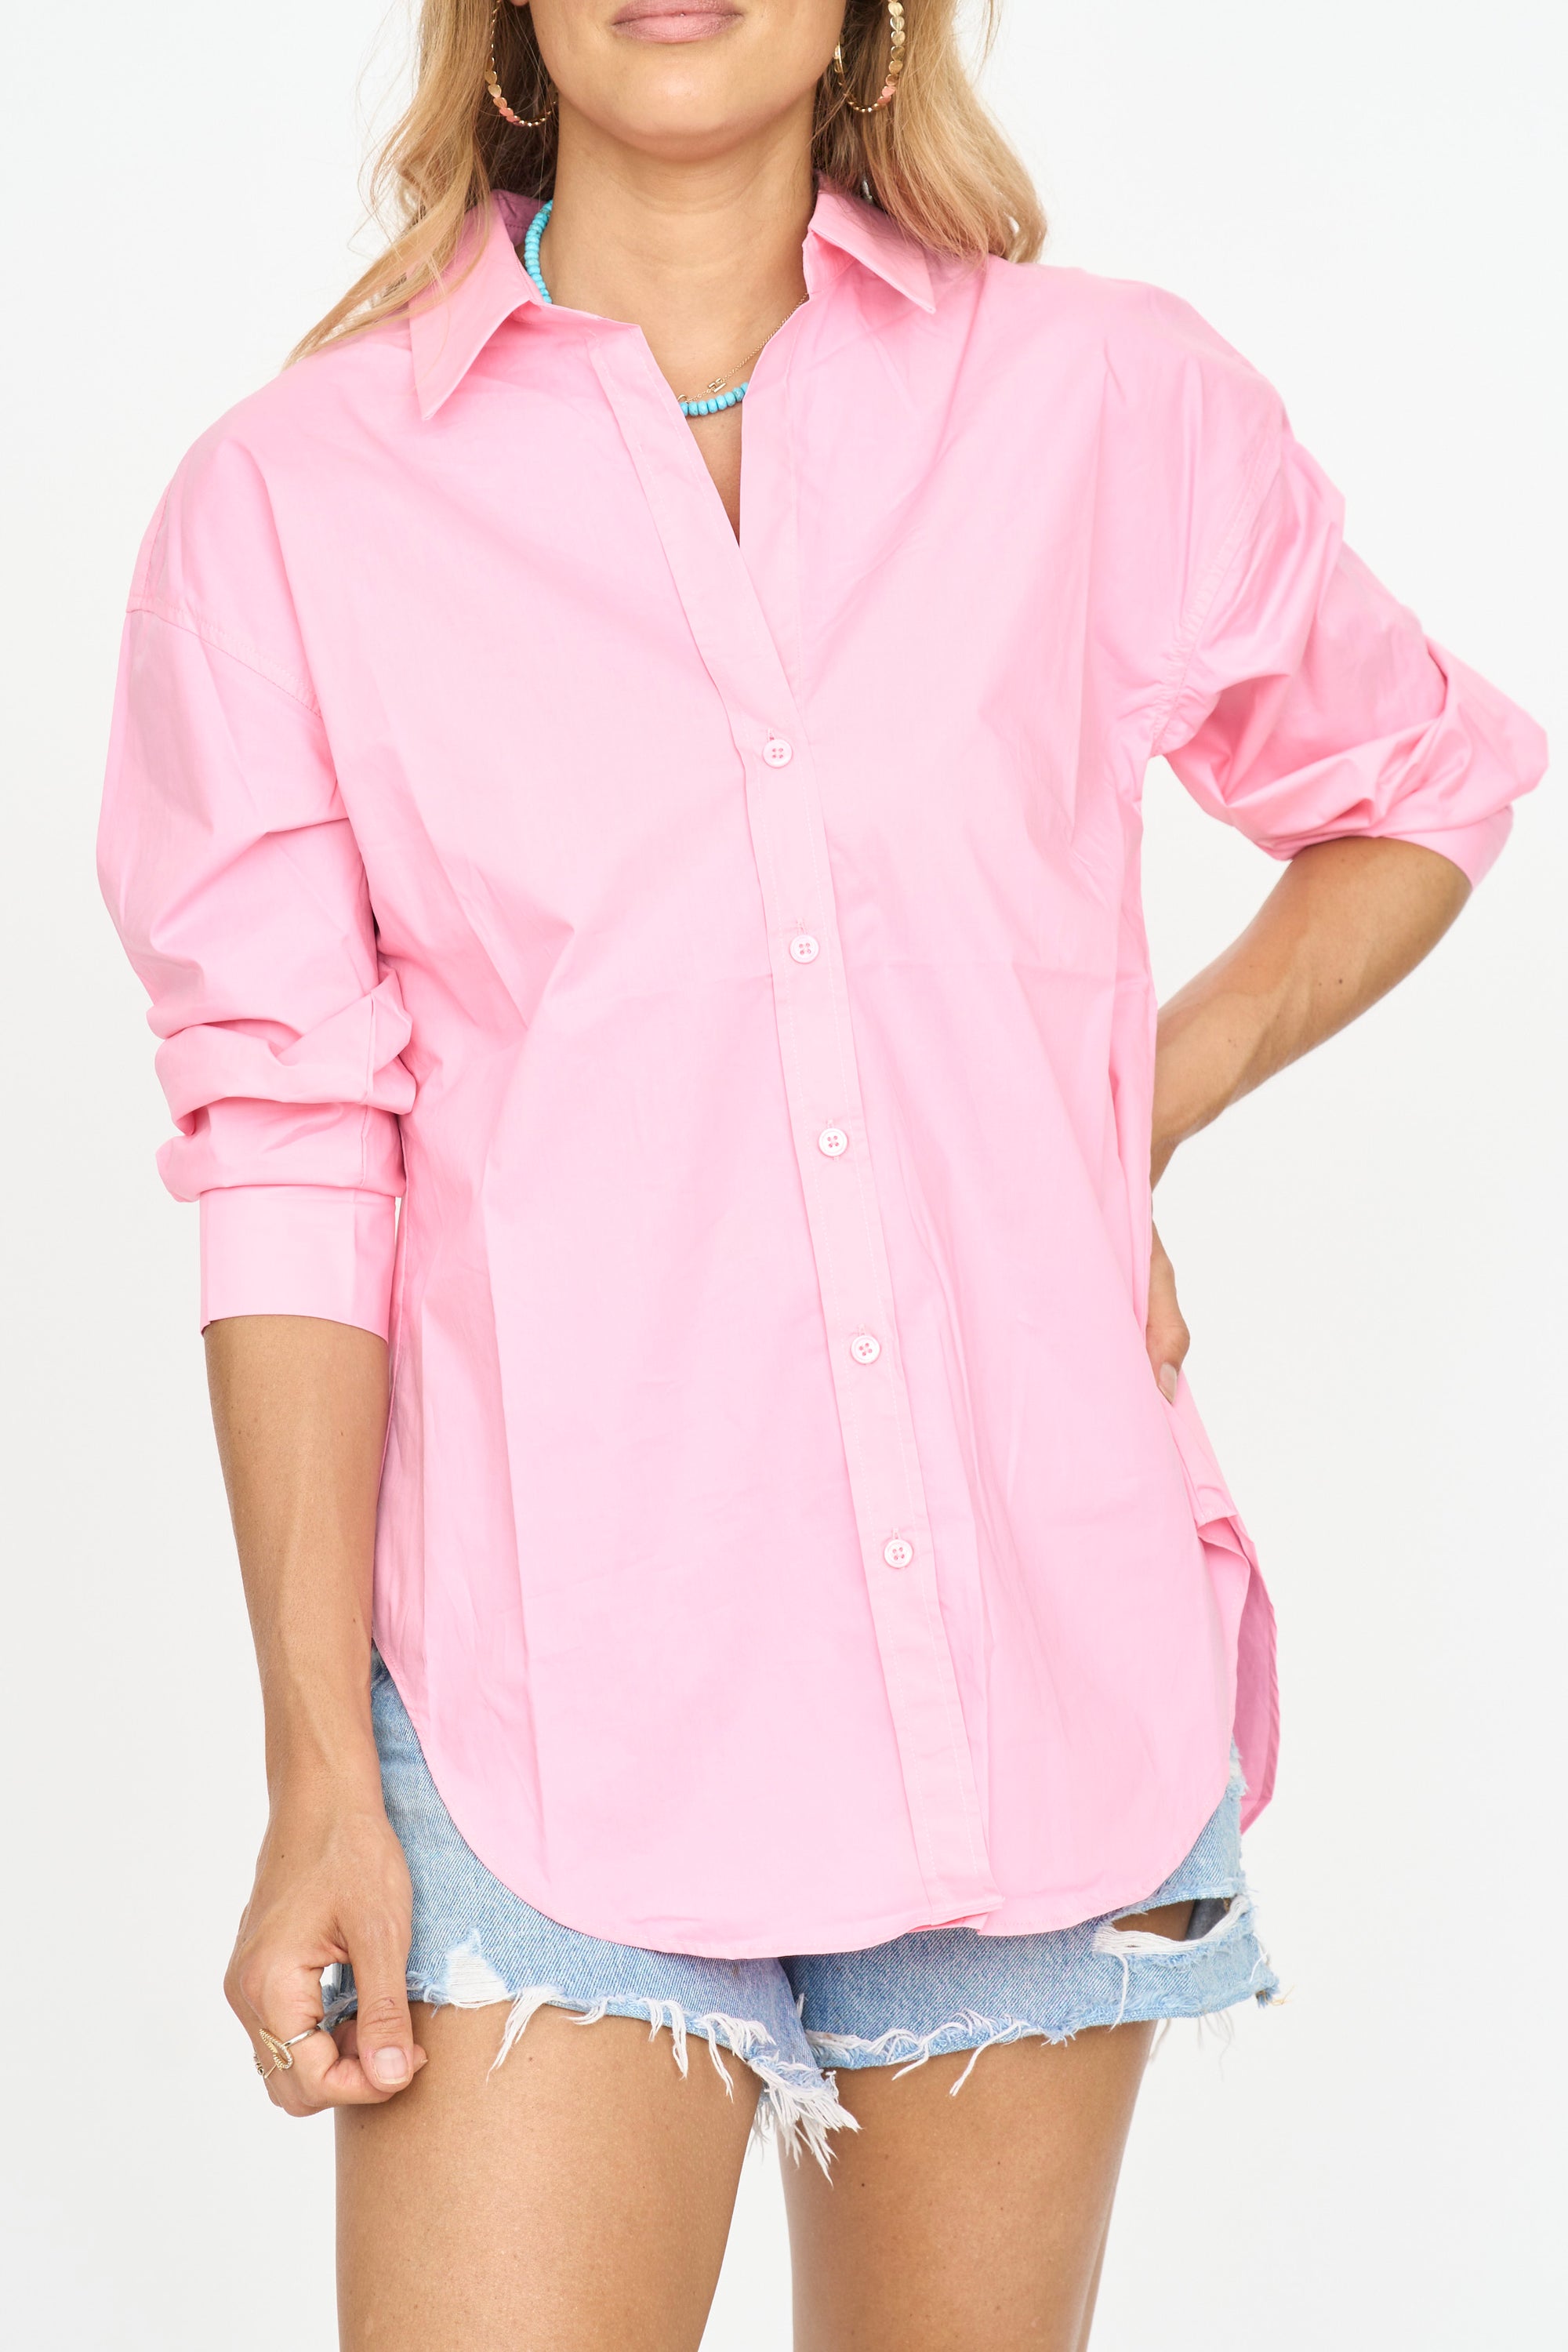 Barbie Pink Collared Shirt